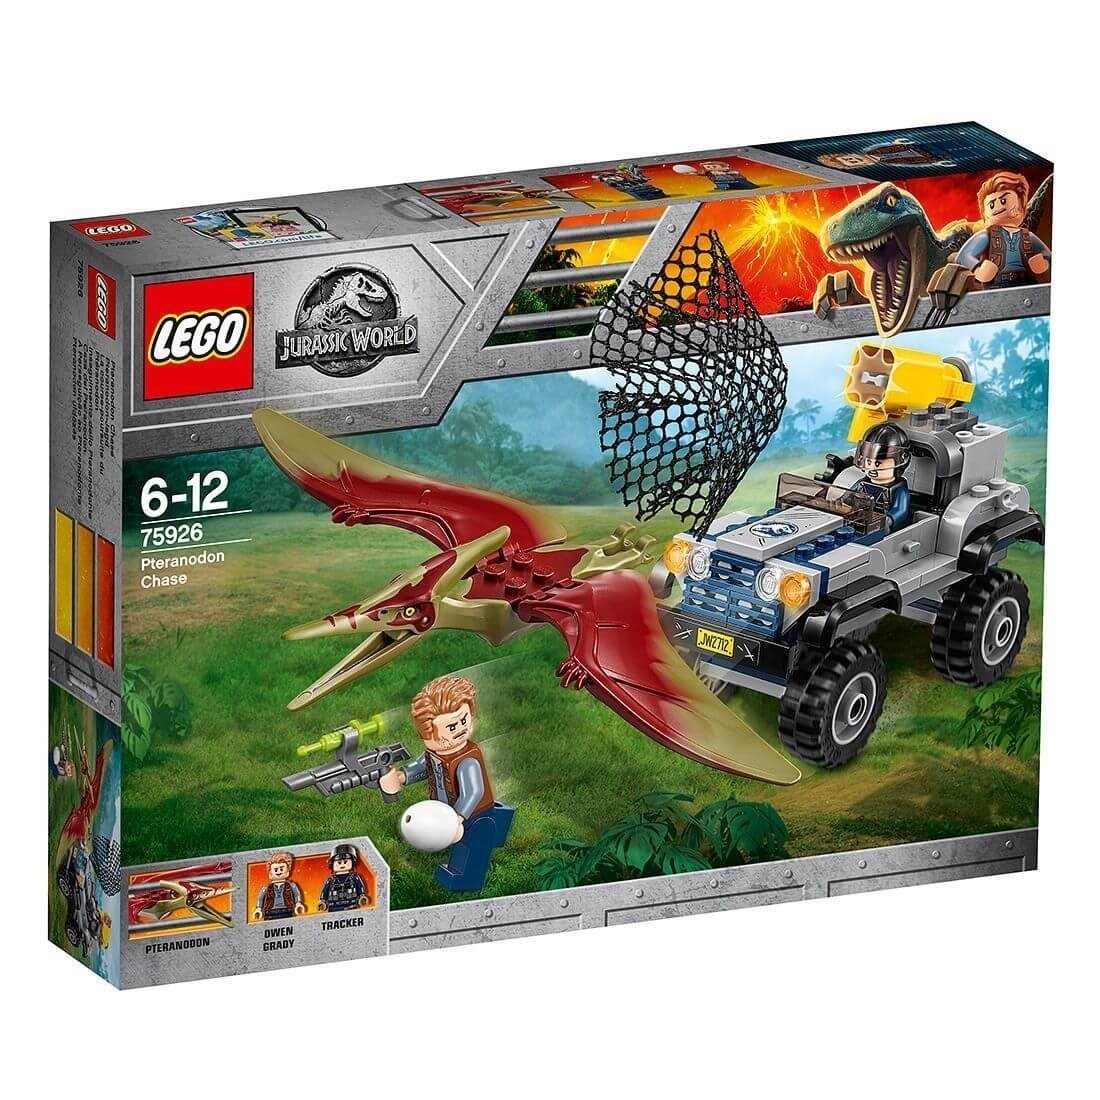 Lego Jurassic World 75926 Pteranodon Chase